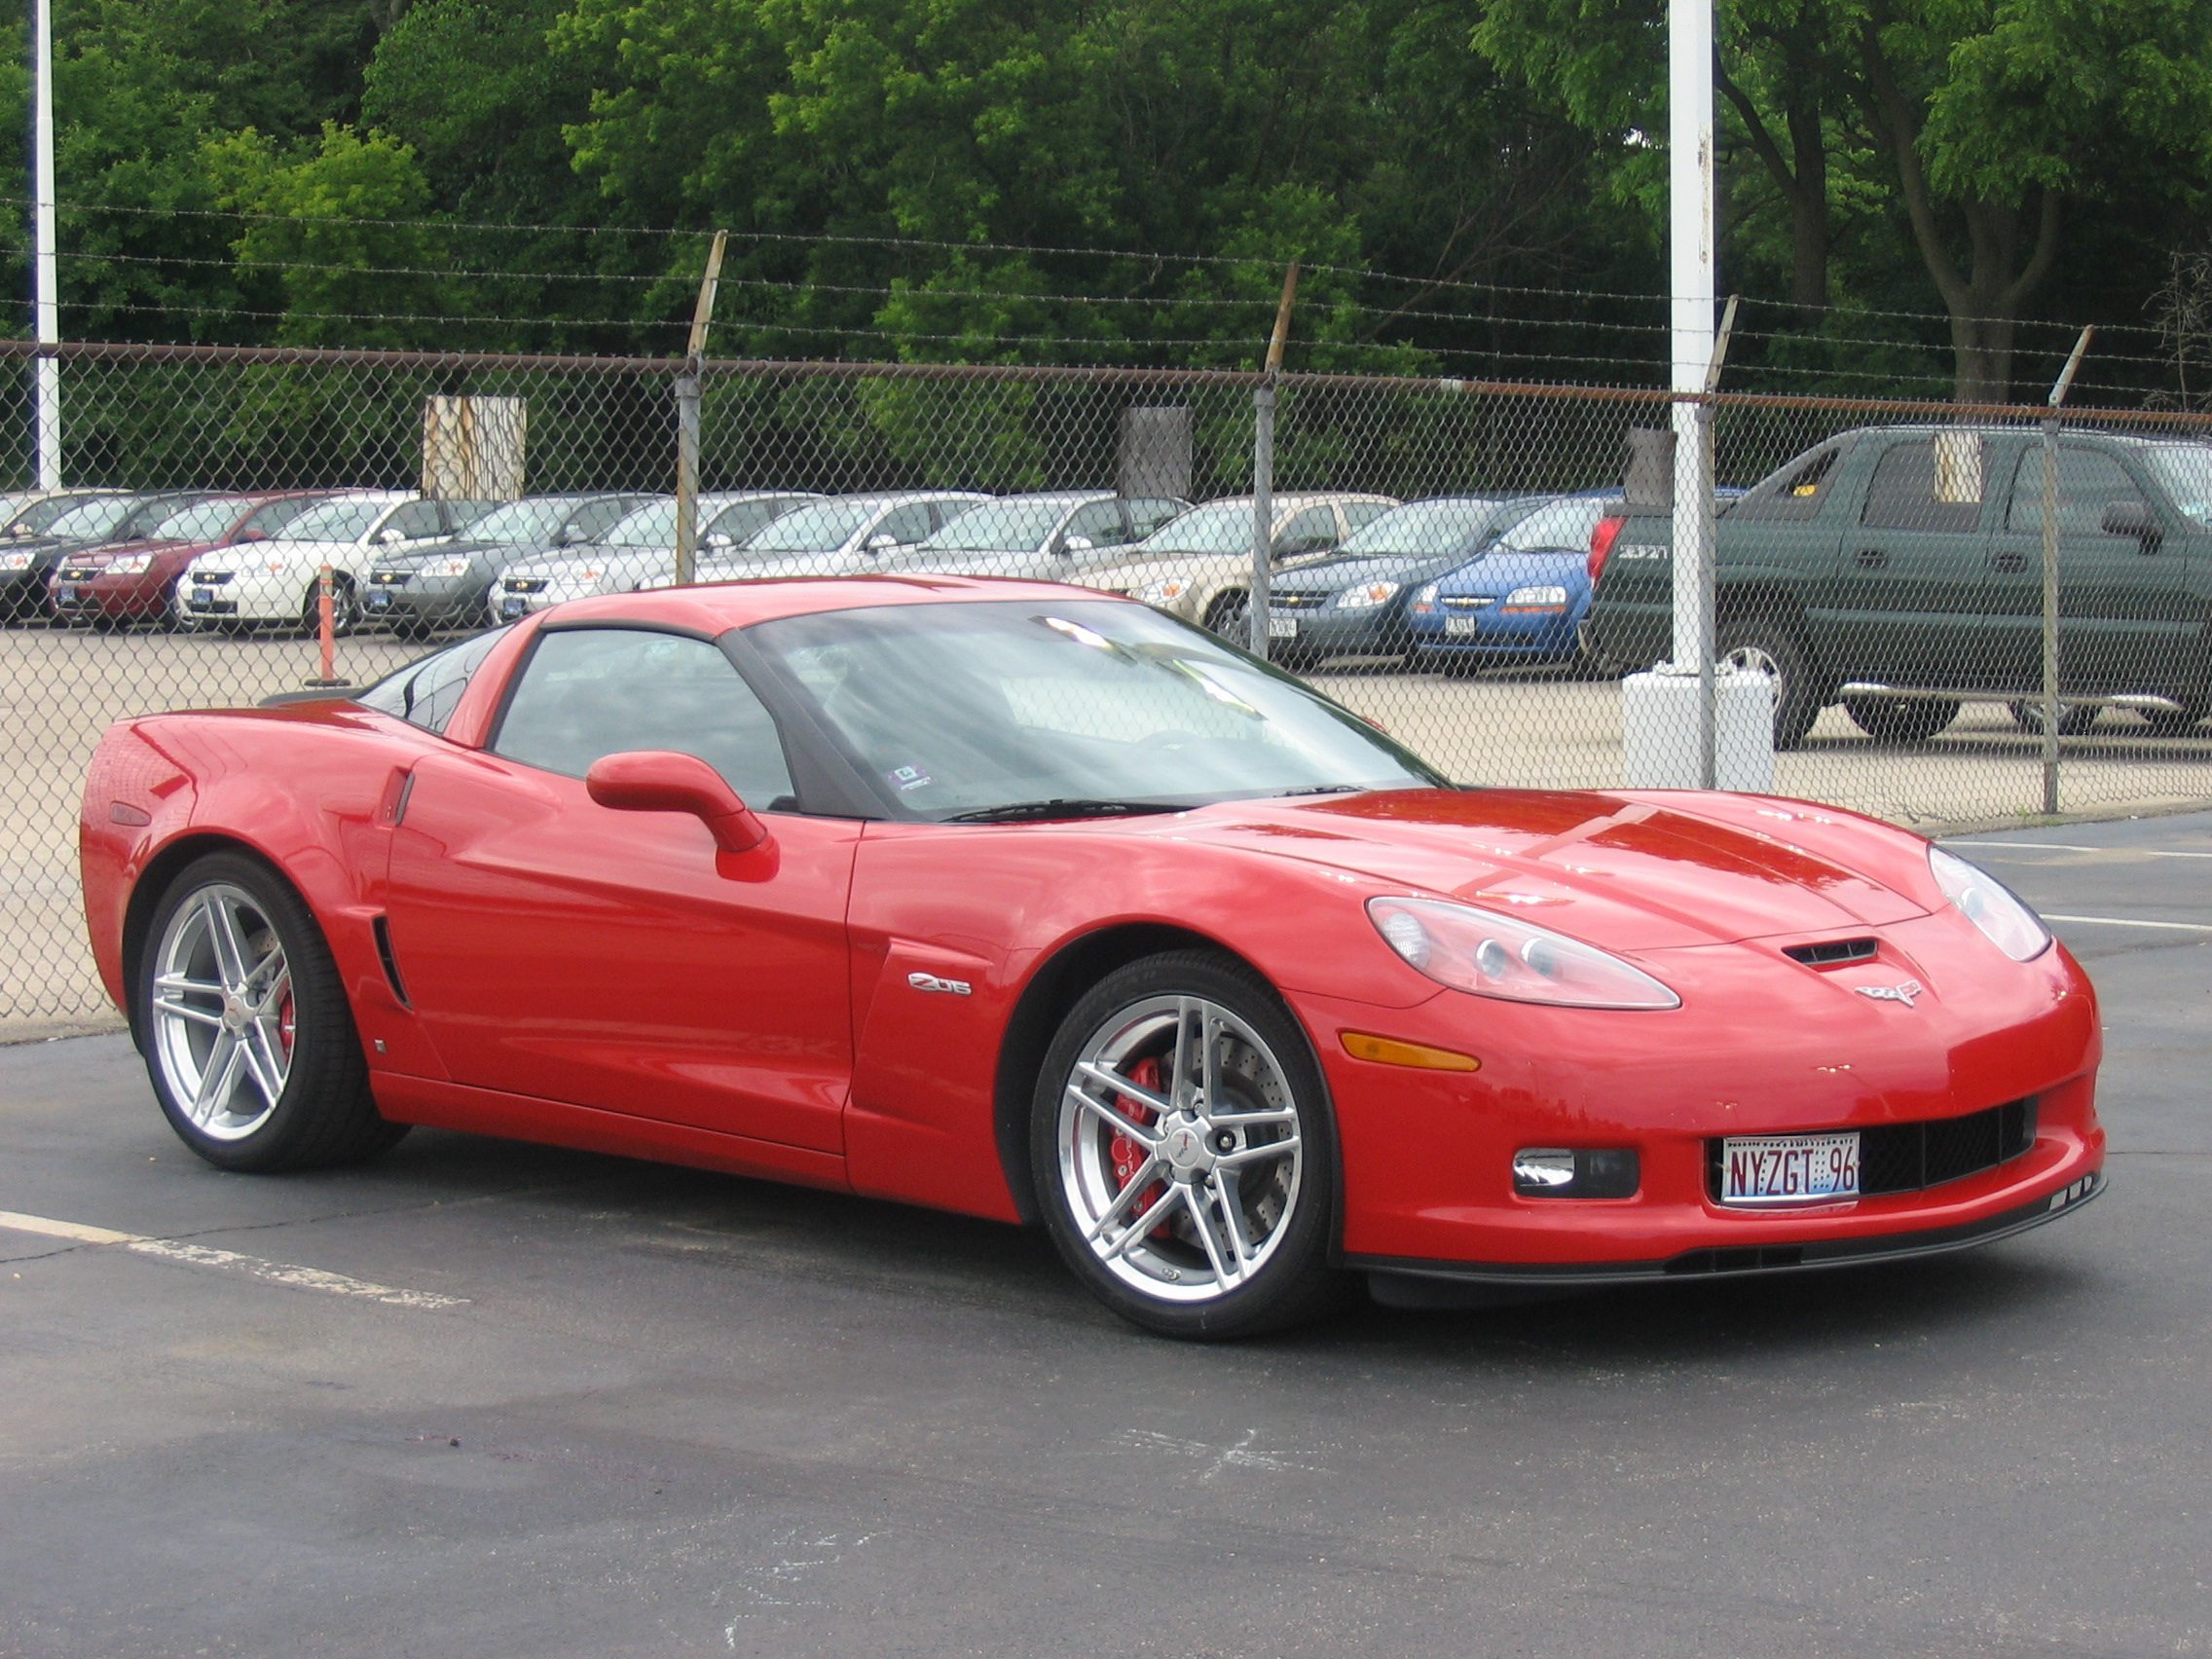 2008 C6 Corvette Pictures & Images.